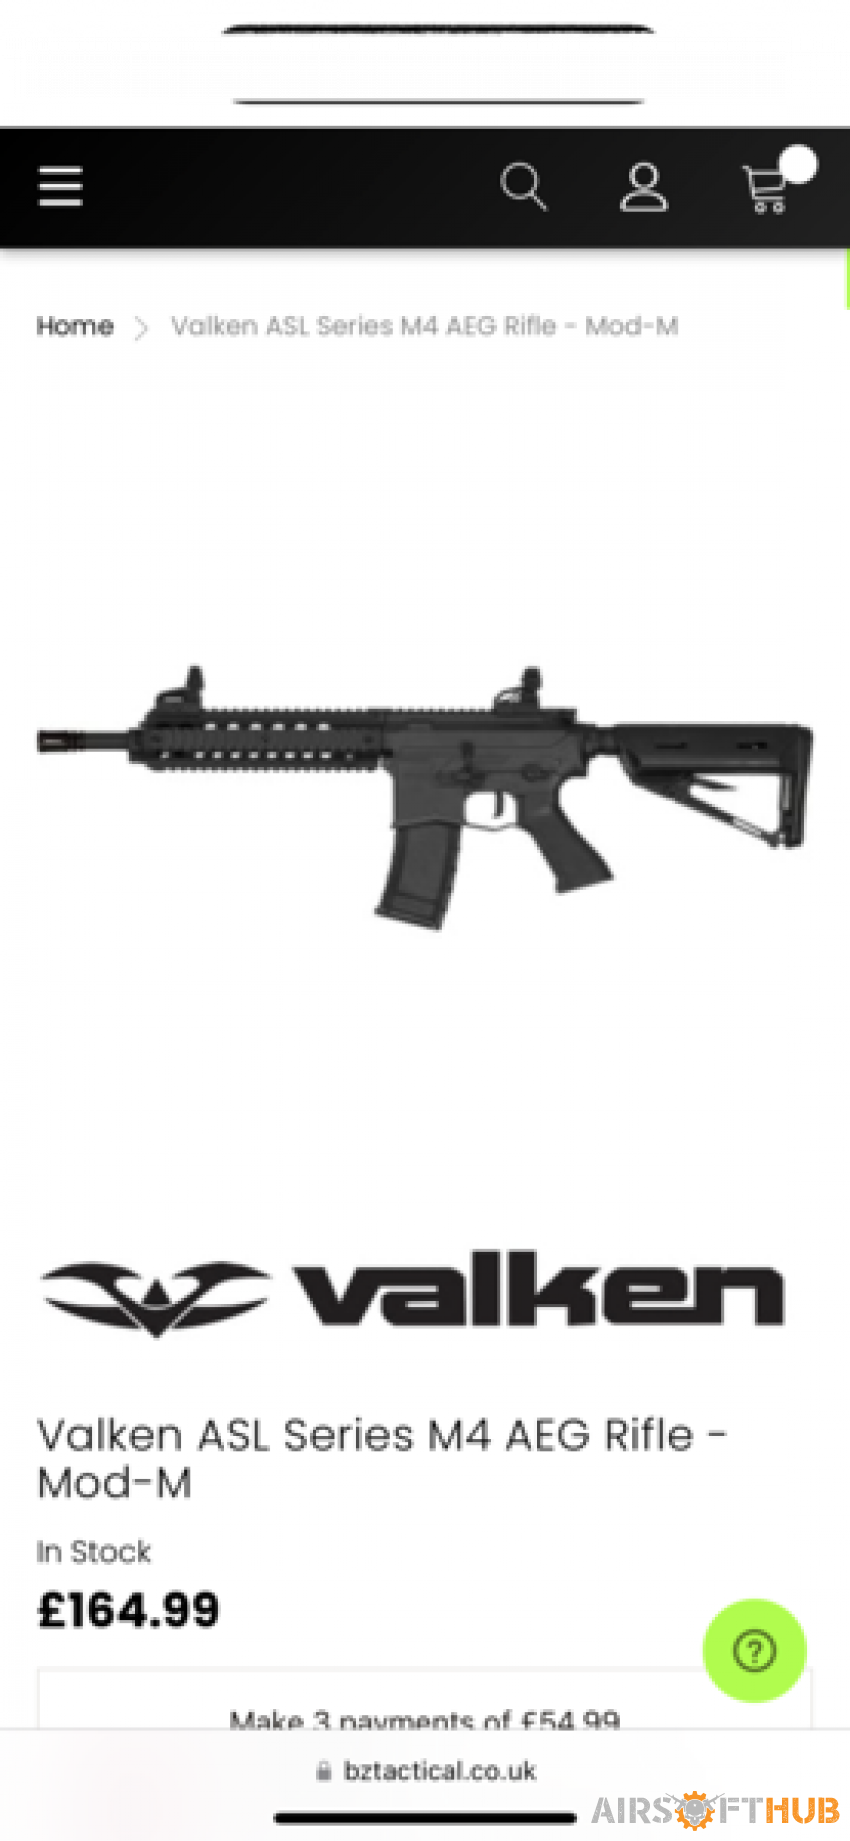 Valken ASL Mod-M - Used airsoft equipment